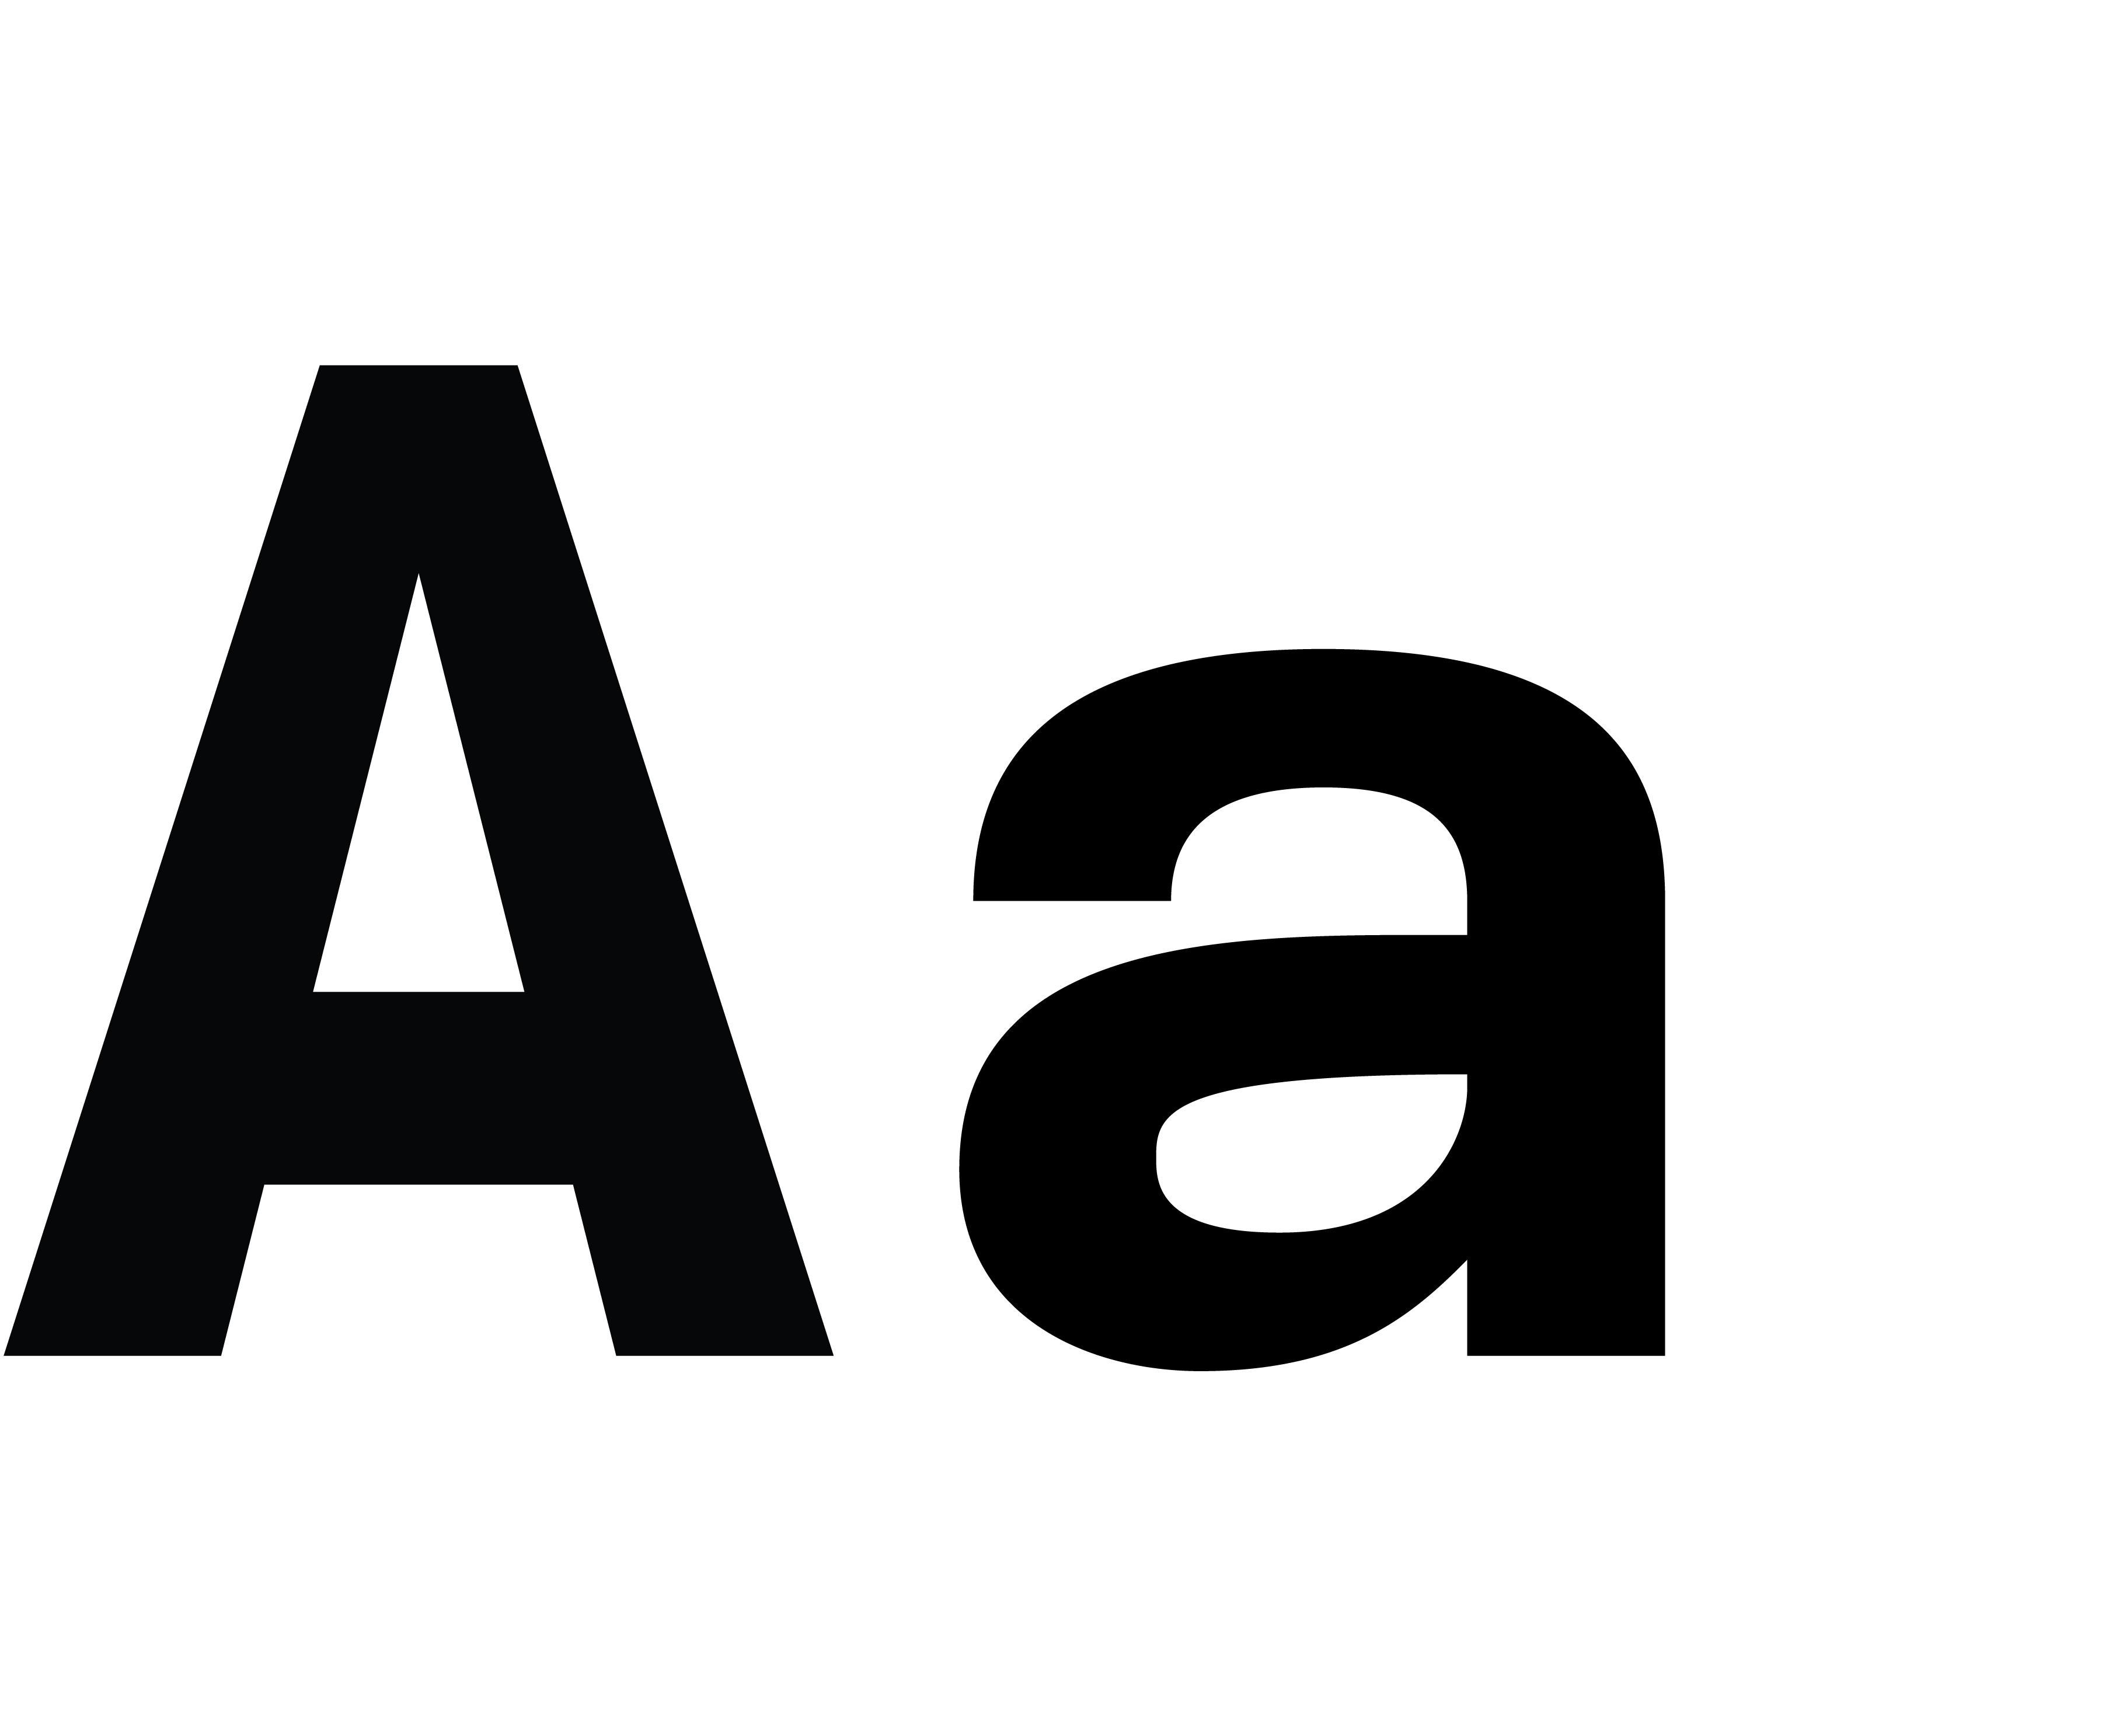 uppercase-and-lowercase-letterform-studies-brandon-lin